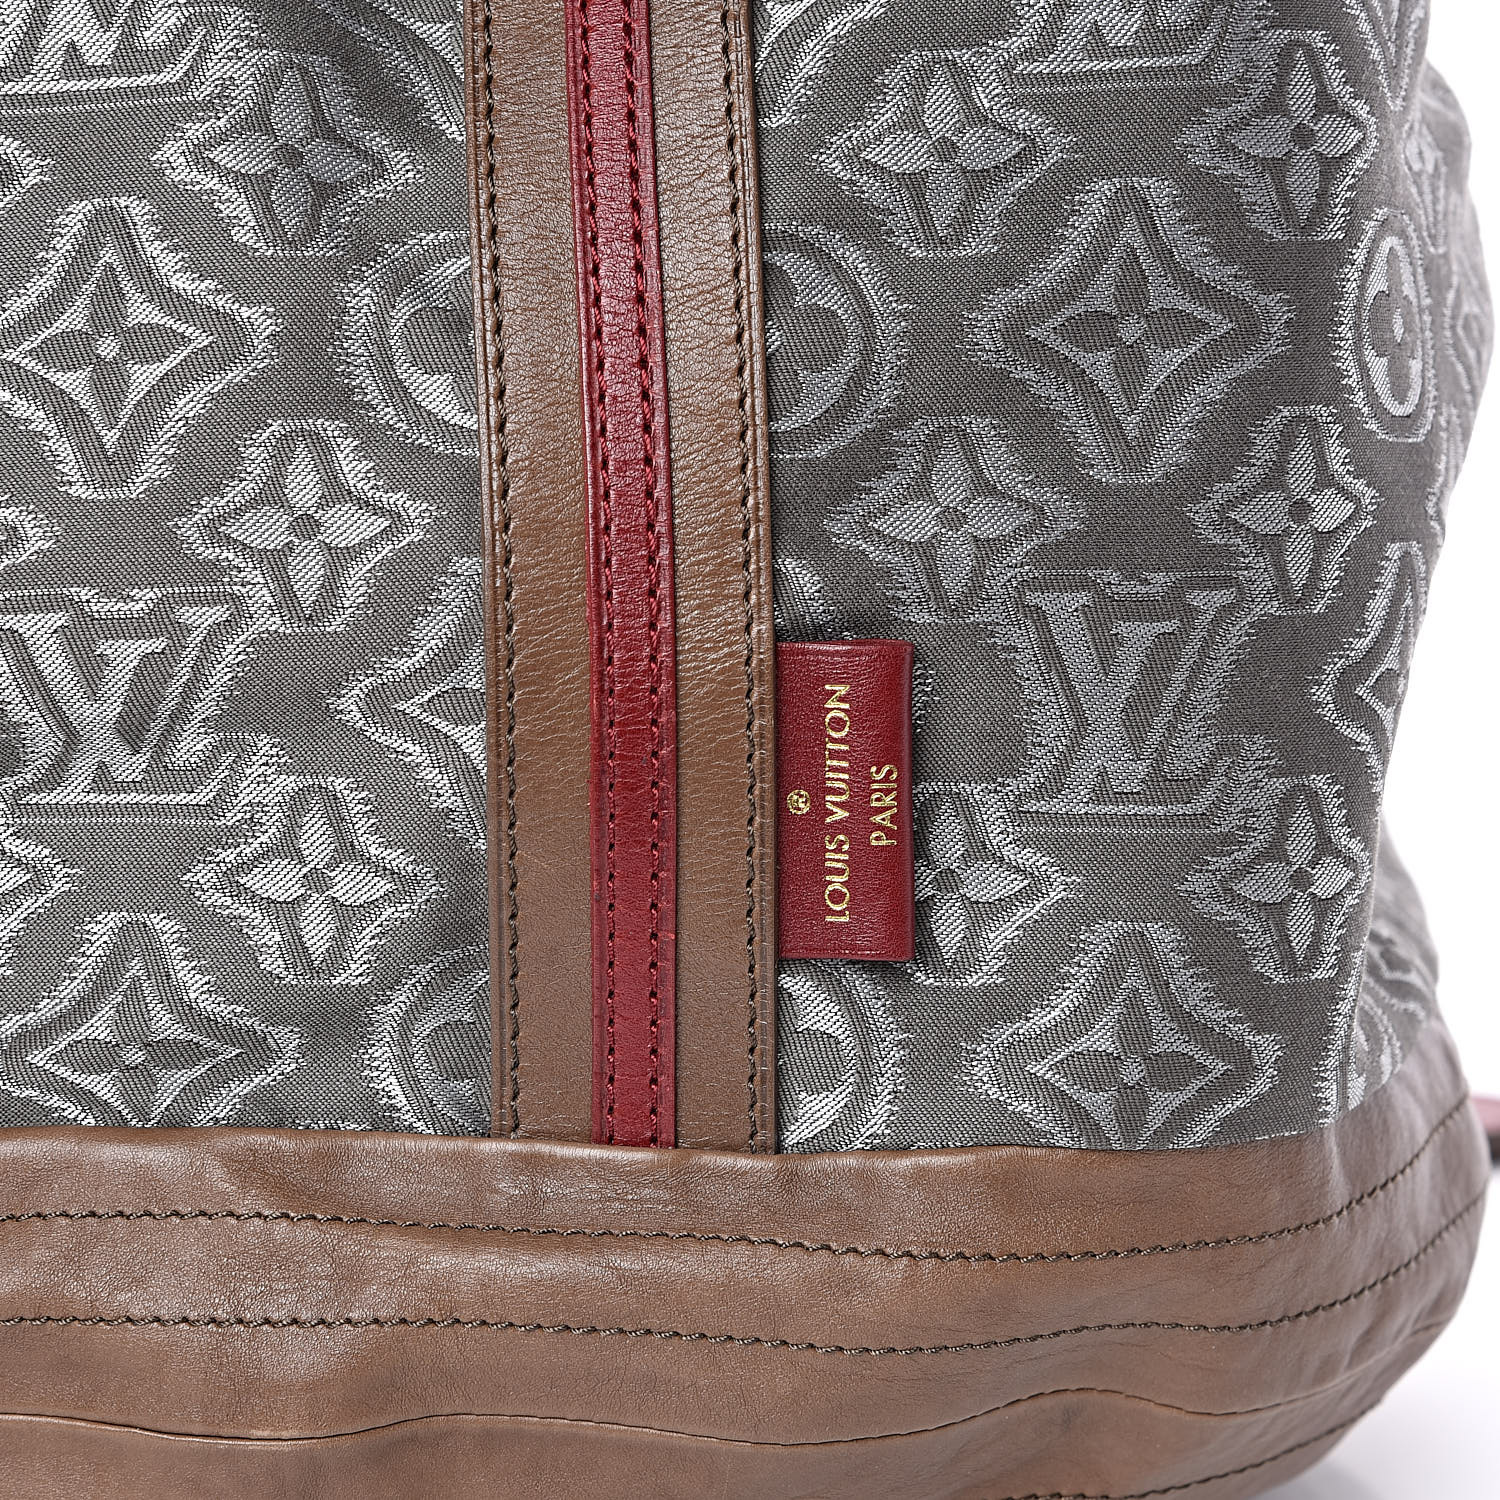 Louis Vuitton Limited Edition Khaki Jacquard Monogram Fabric